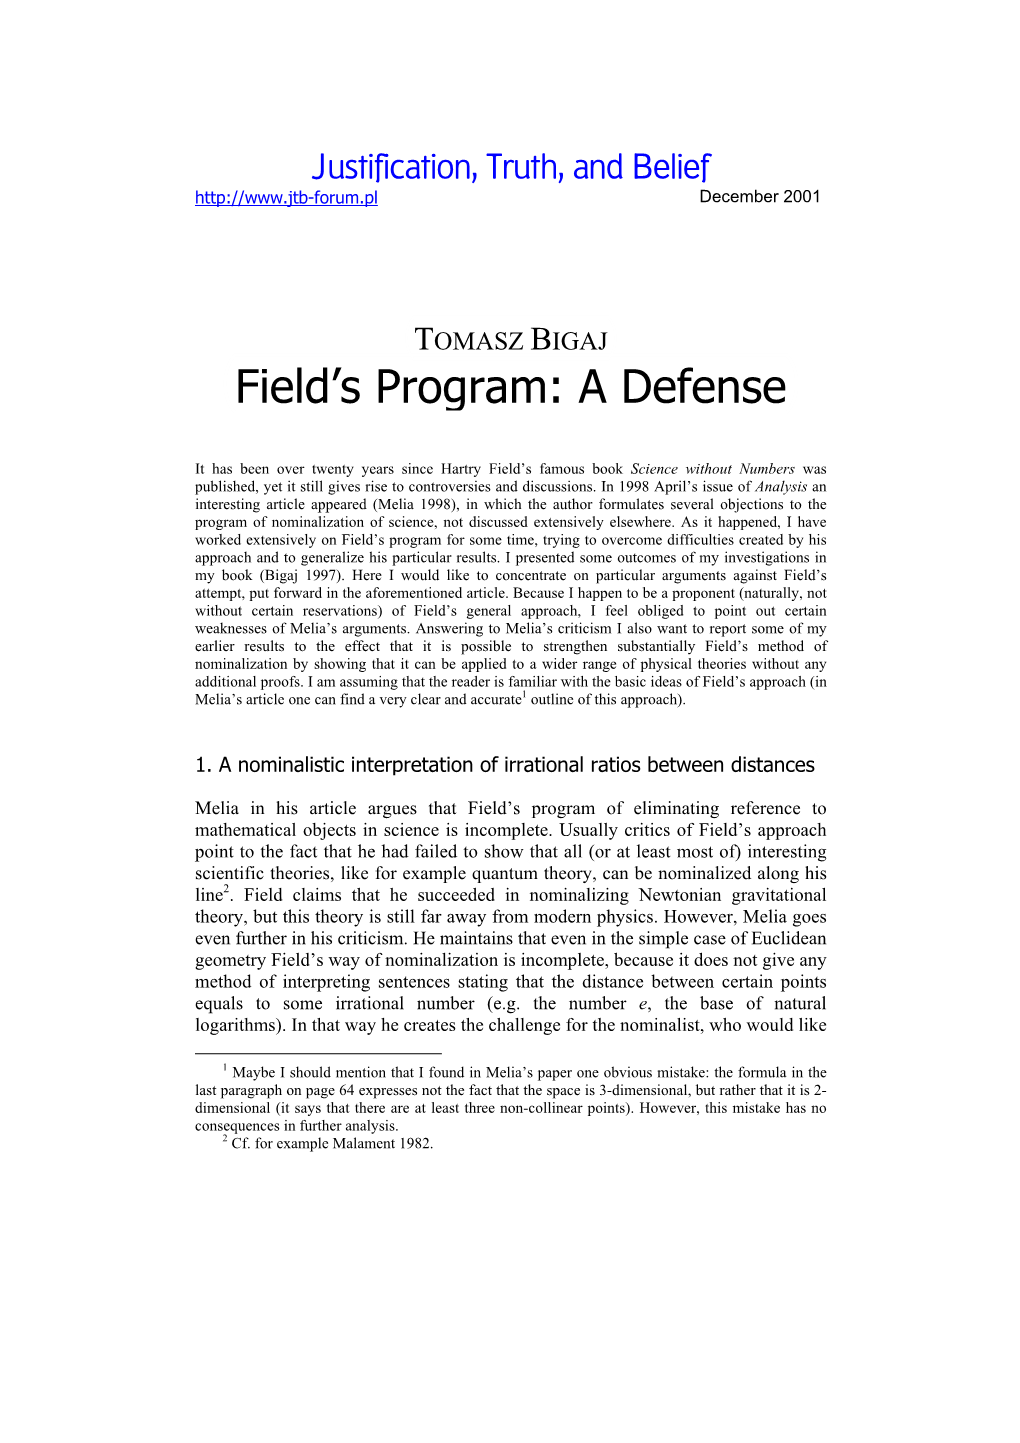 Field's Program: a Defence